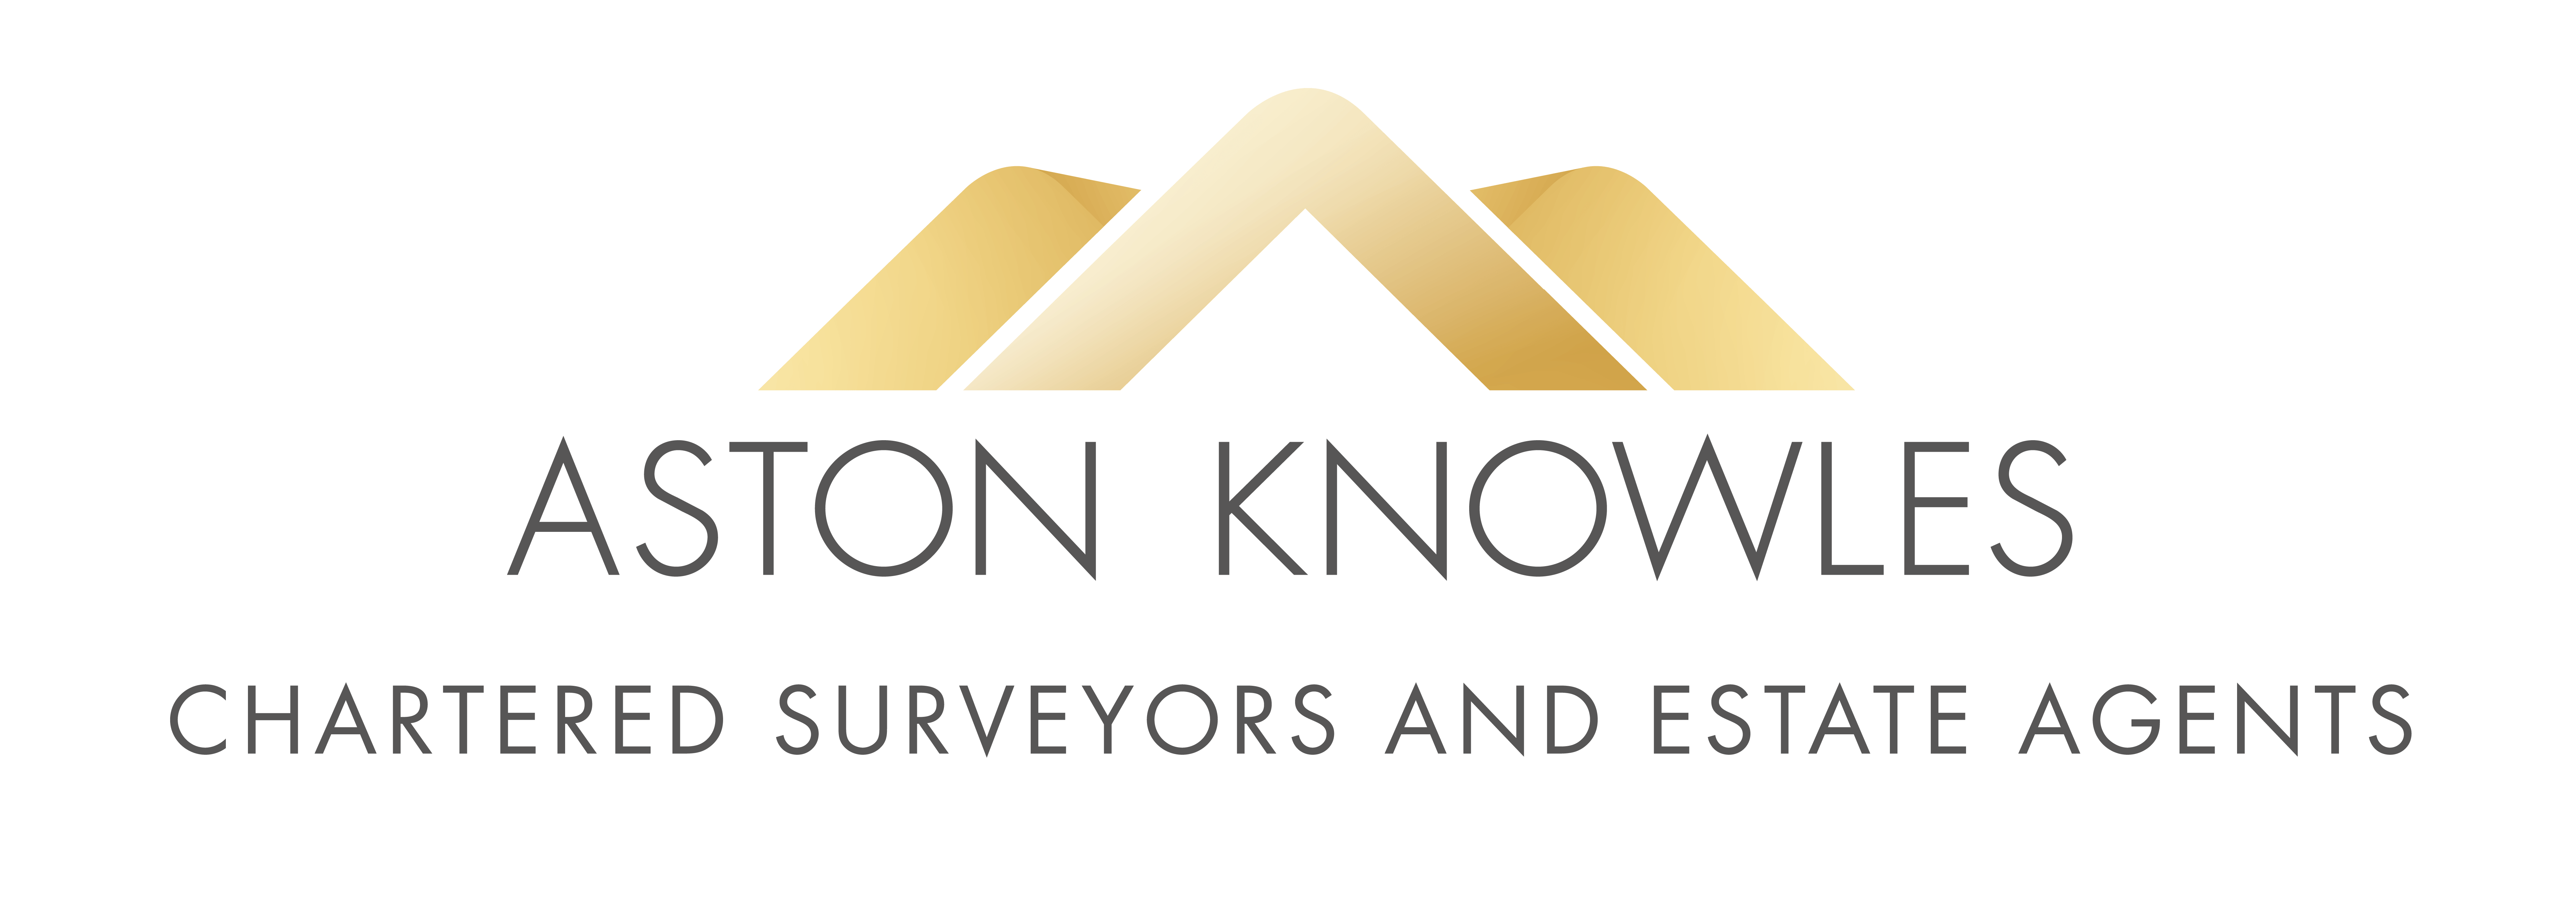 Knowles Logo - Premium Properties In Sutton Coldfield - Aston Knowles